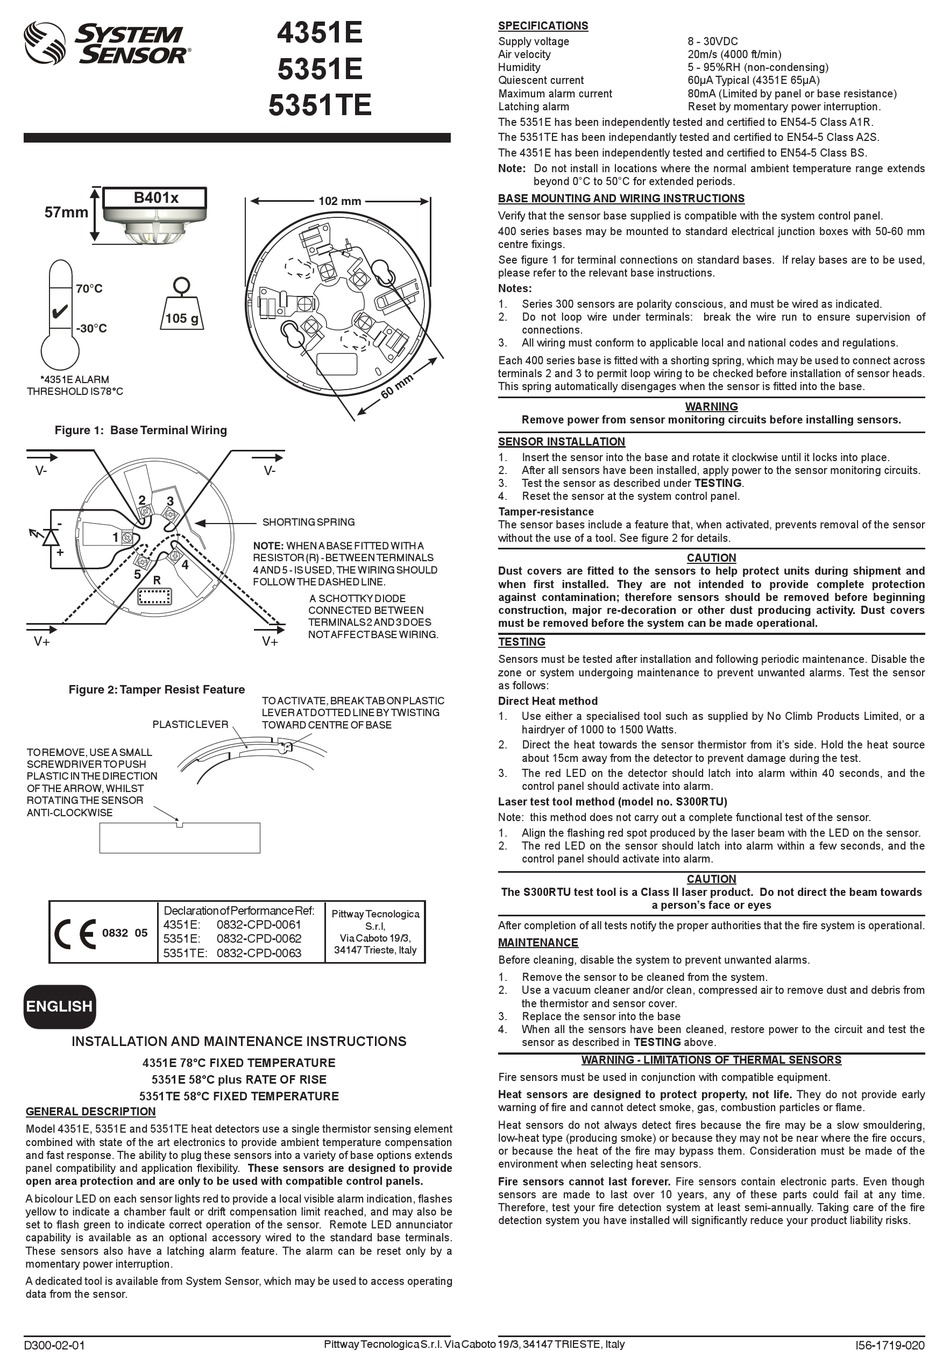 SYSTEM SENSOR 5351E MANUAL Pdf Download | ManualsLib  System Sensor 2351e Smoke Detector Wiring Diagram    ManualsLib